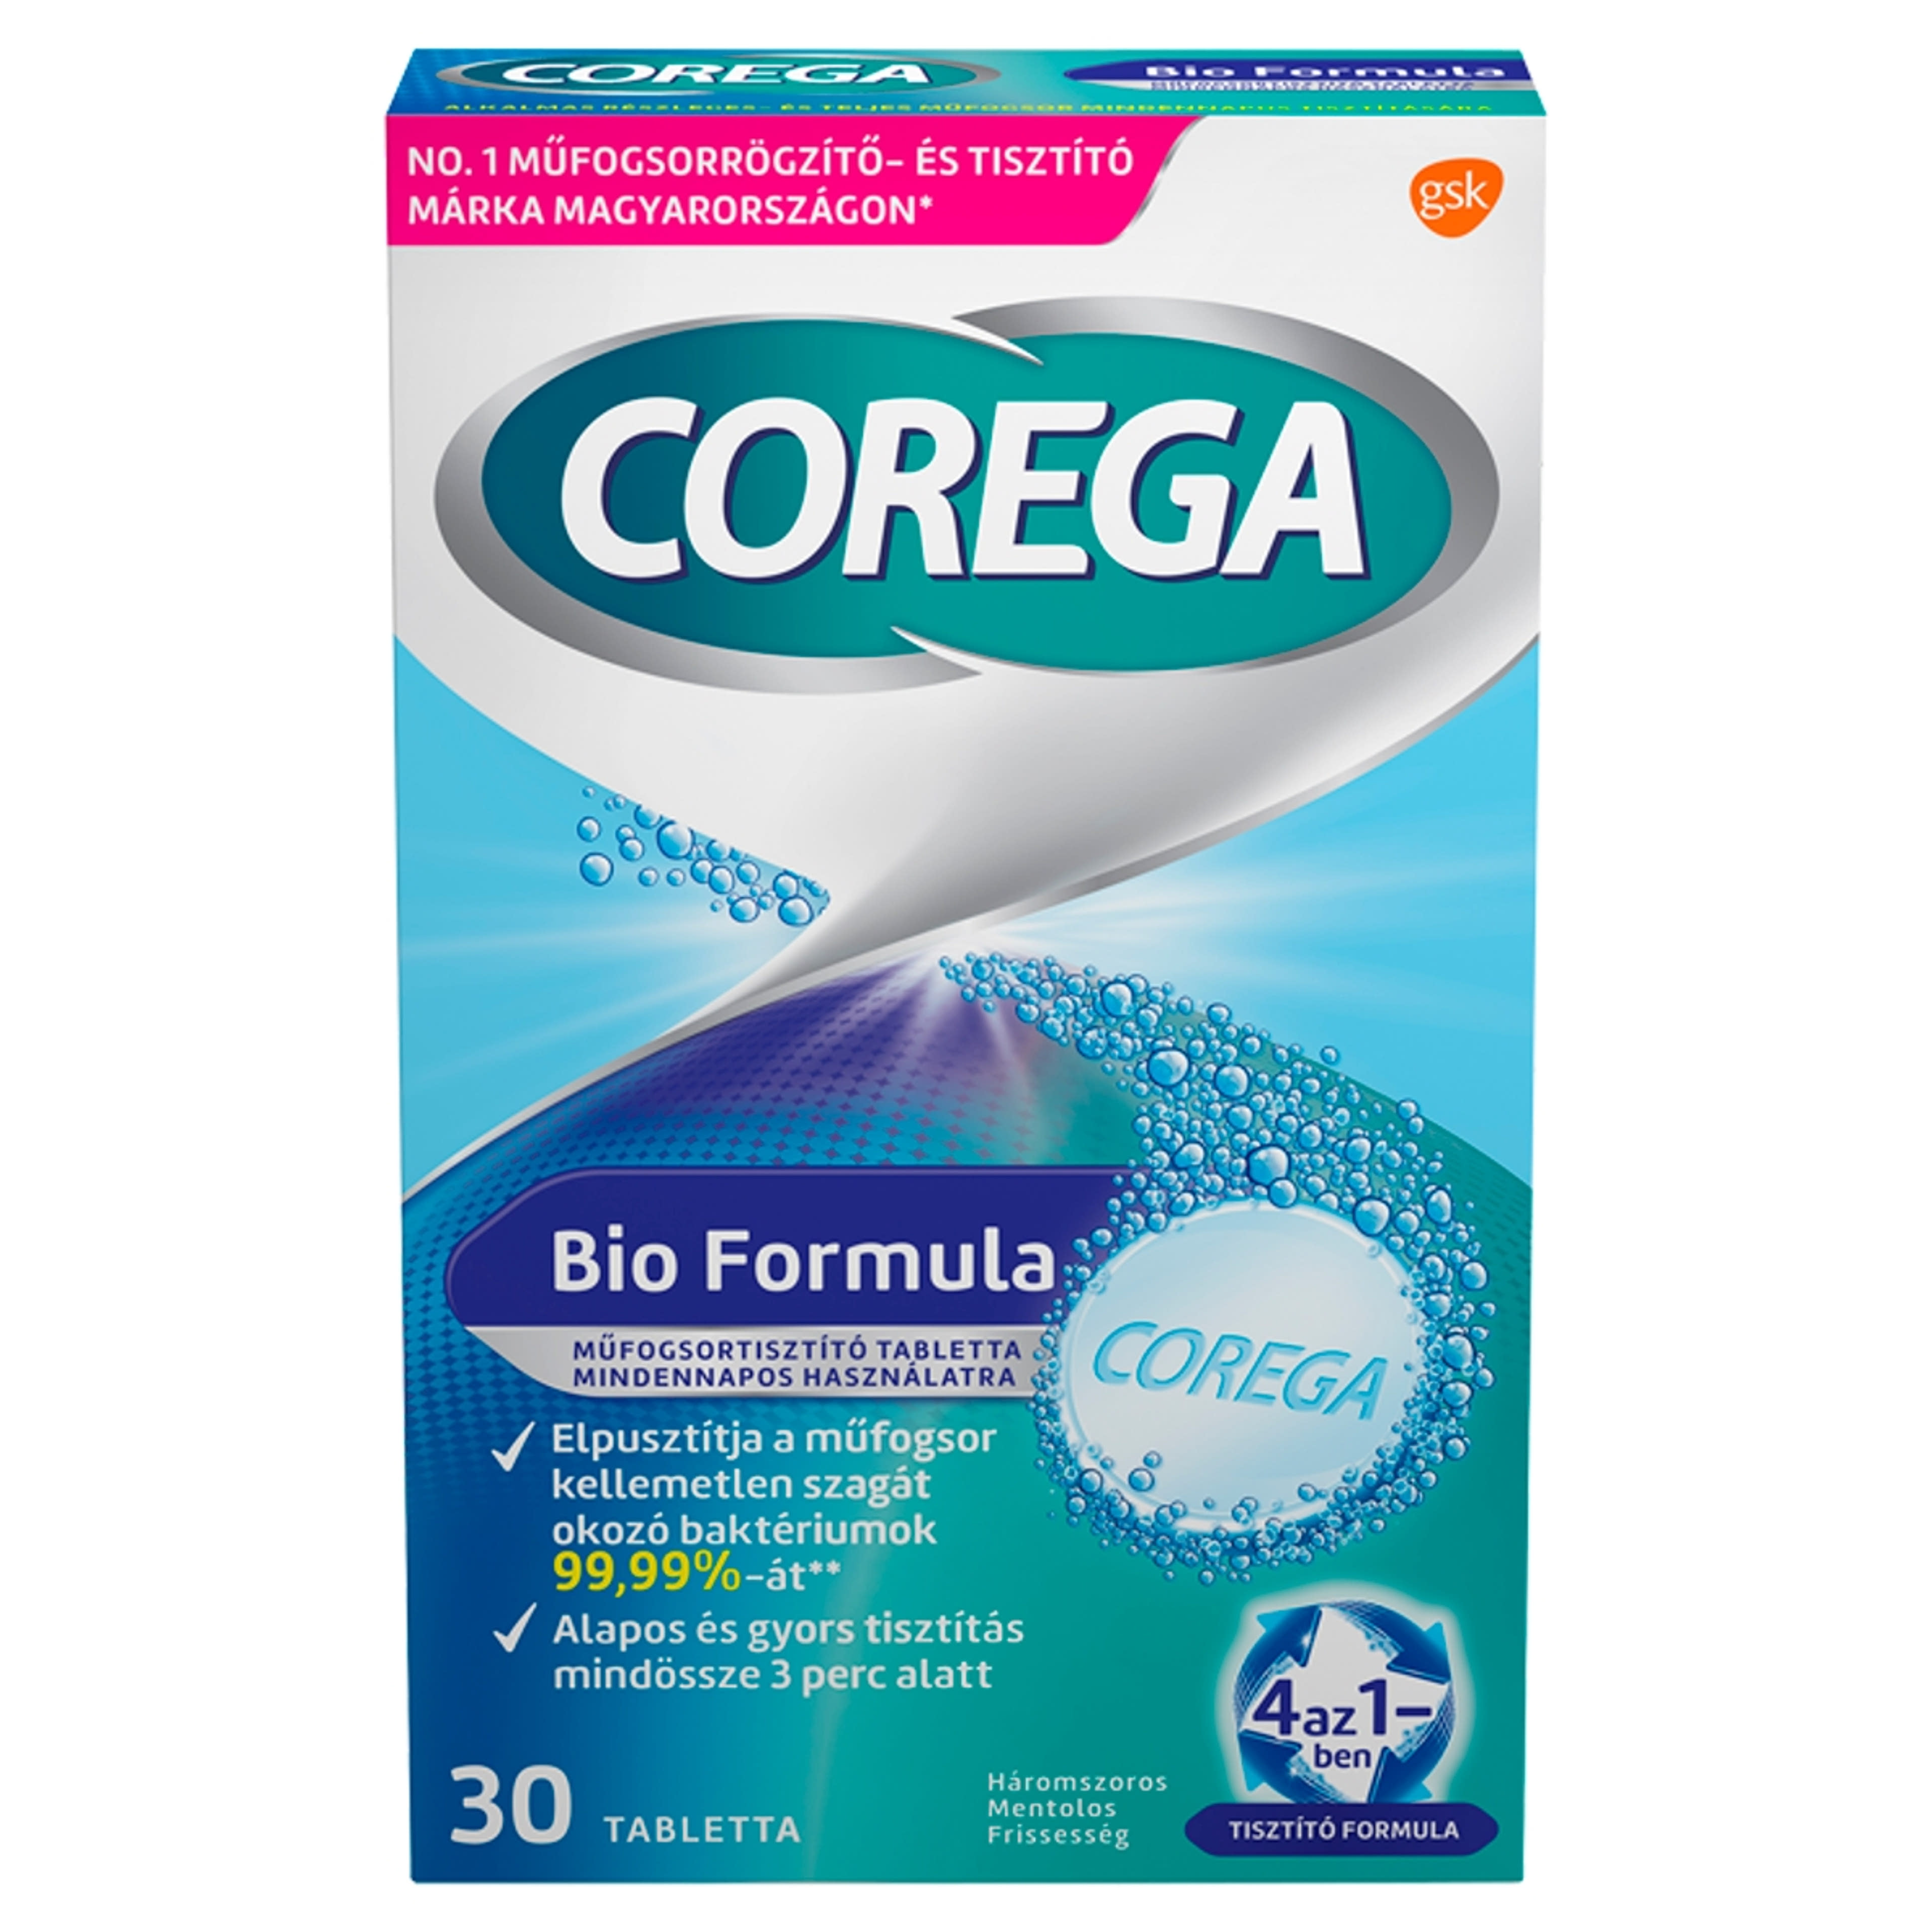 Corega Tabs Bio Formula műfogsor tisztító tabletta - 30 db